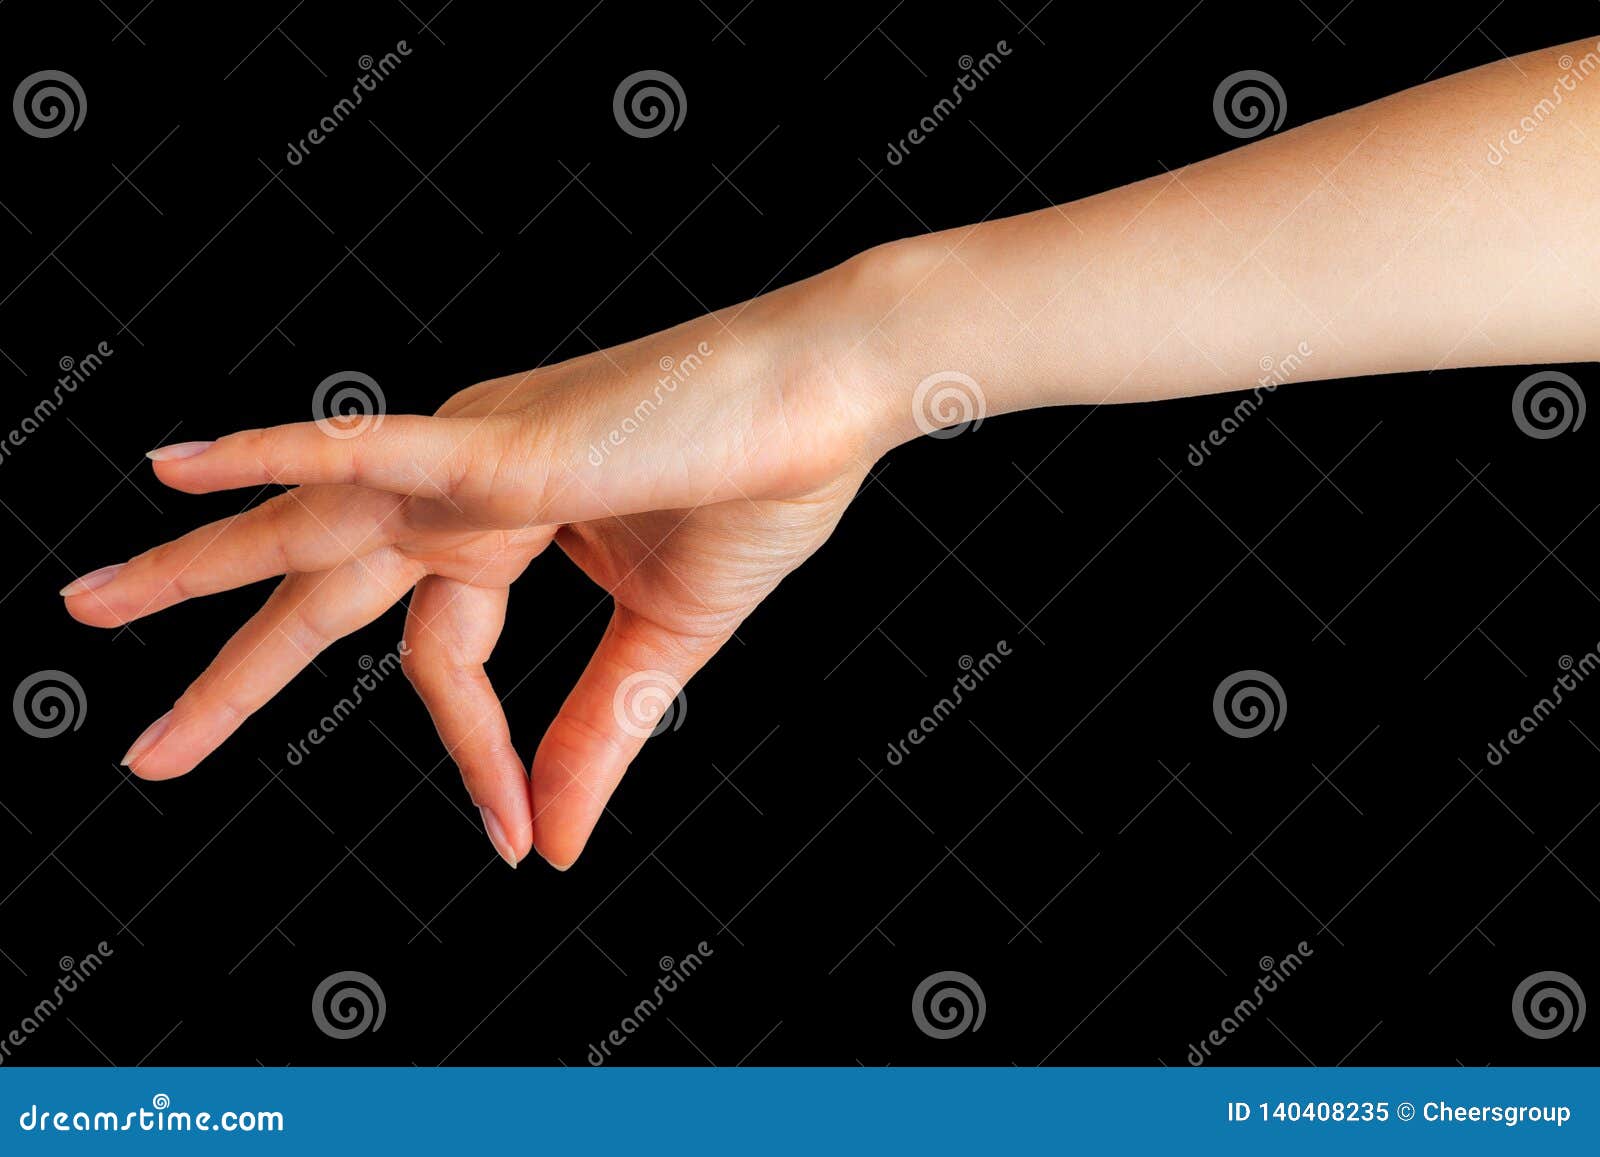 Hand Poses One Finger Vector Illustration Stock Vector (Royalty Free)  1874539702 | Shutterstock